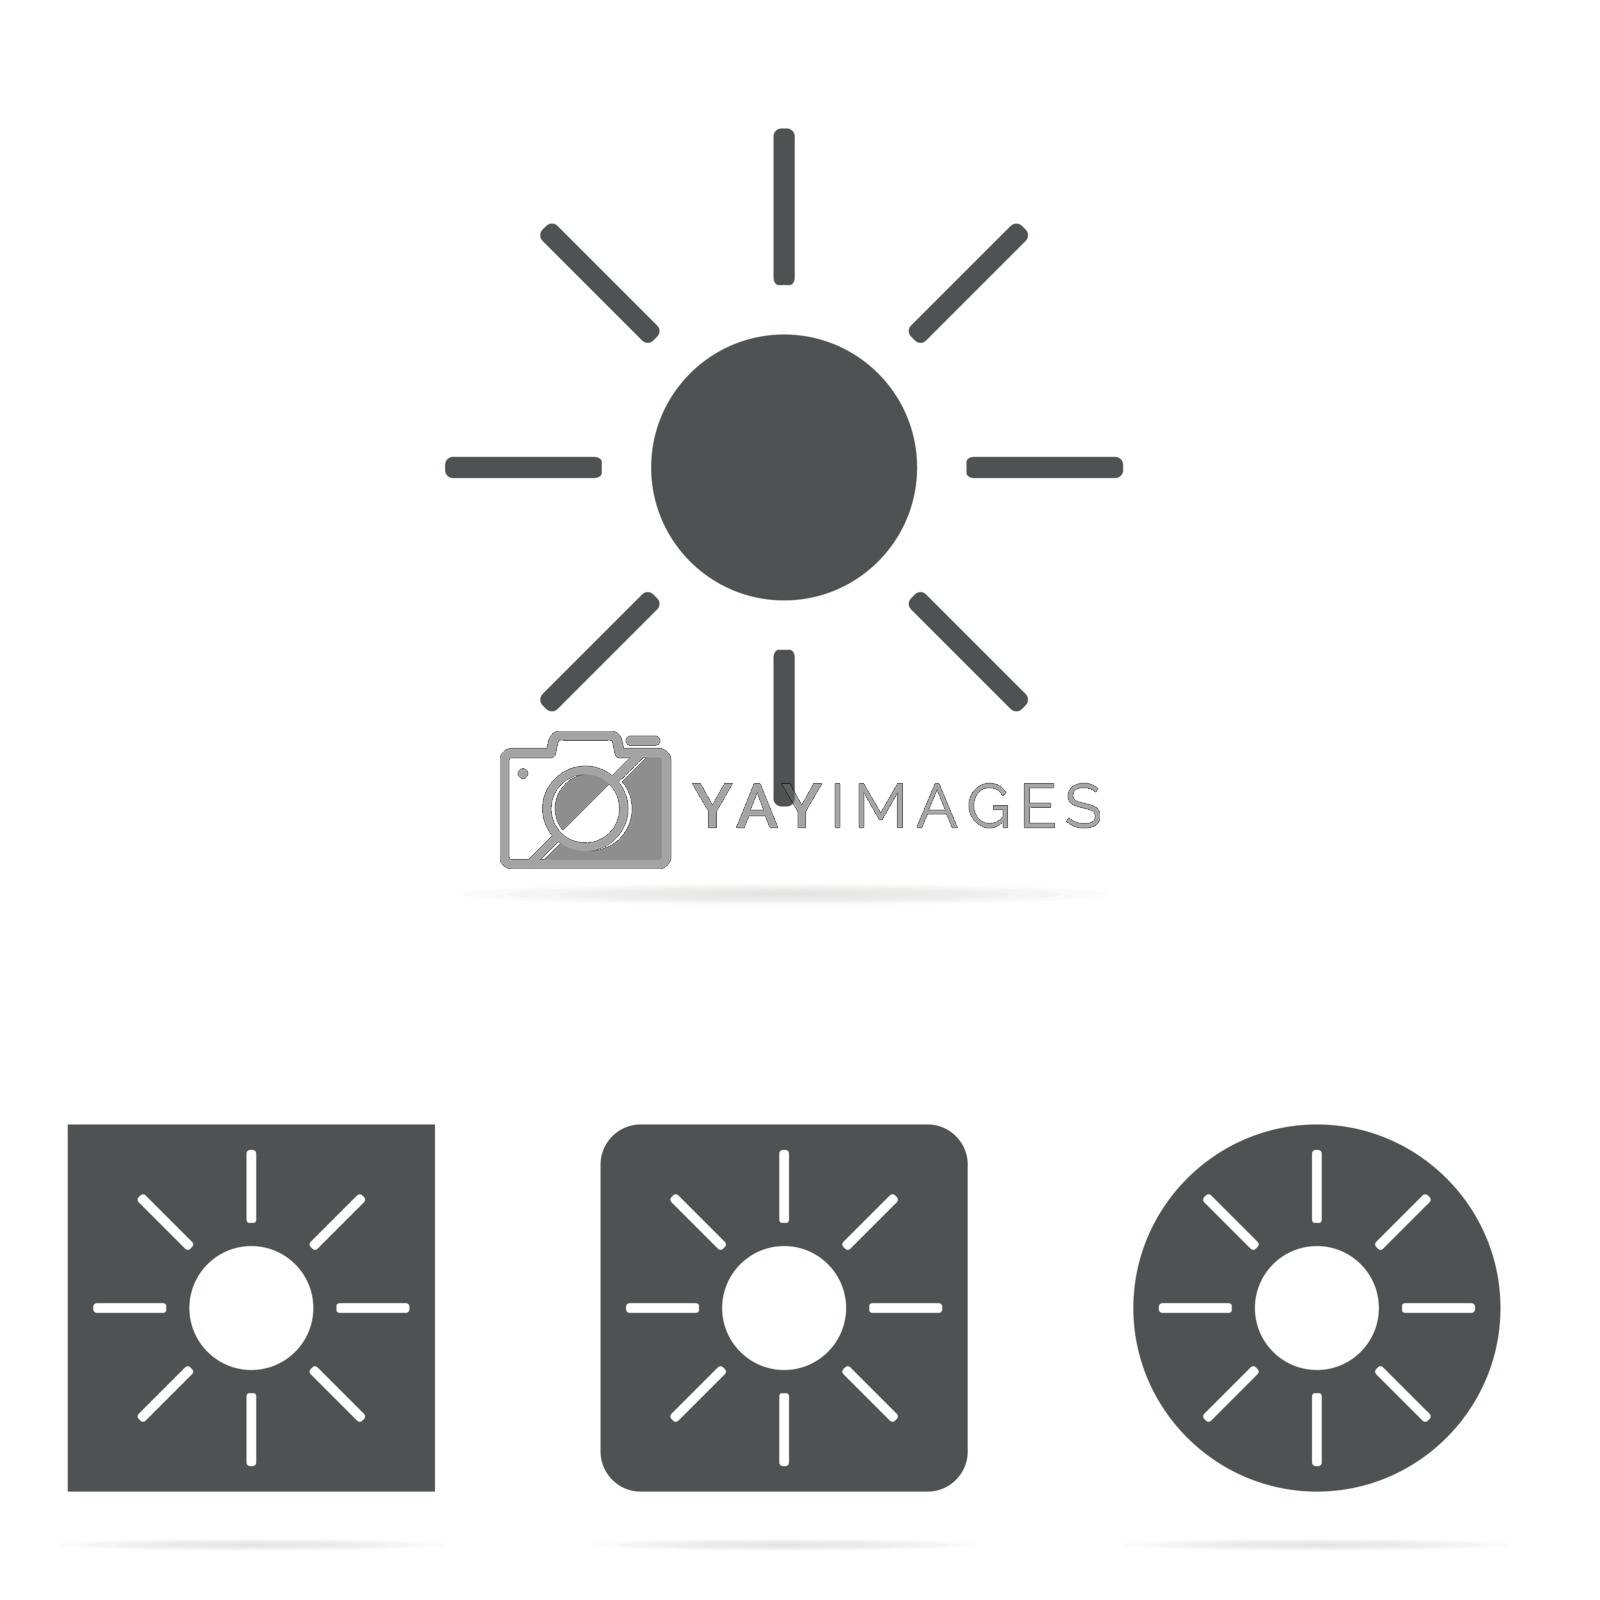 Royalty free image of Sun symbol icon by ggebl